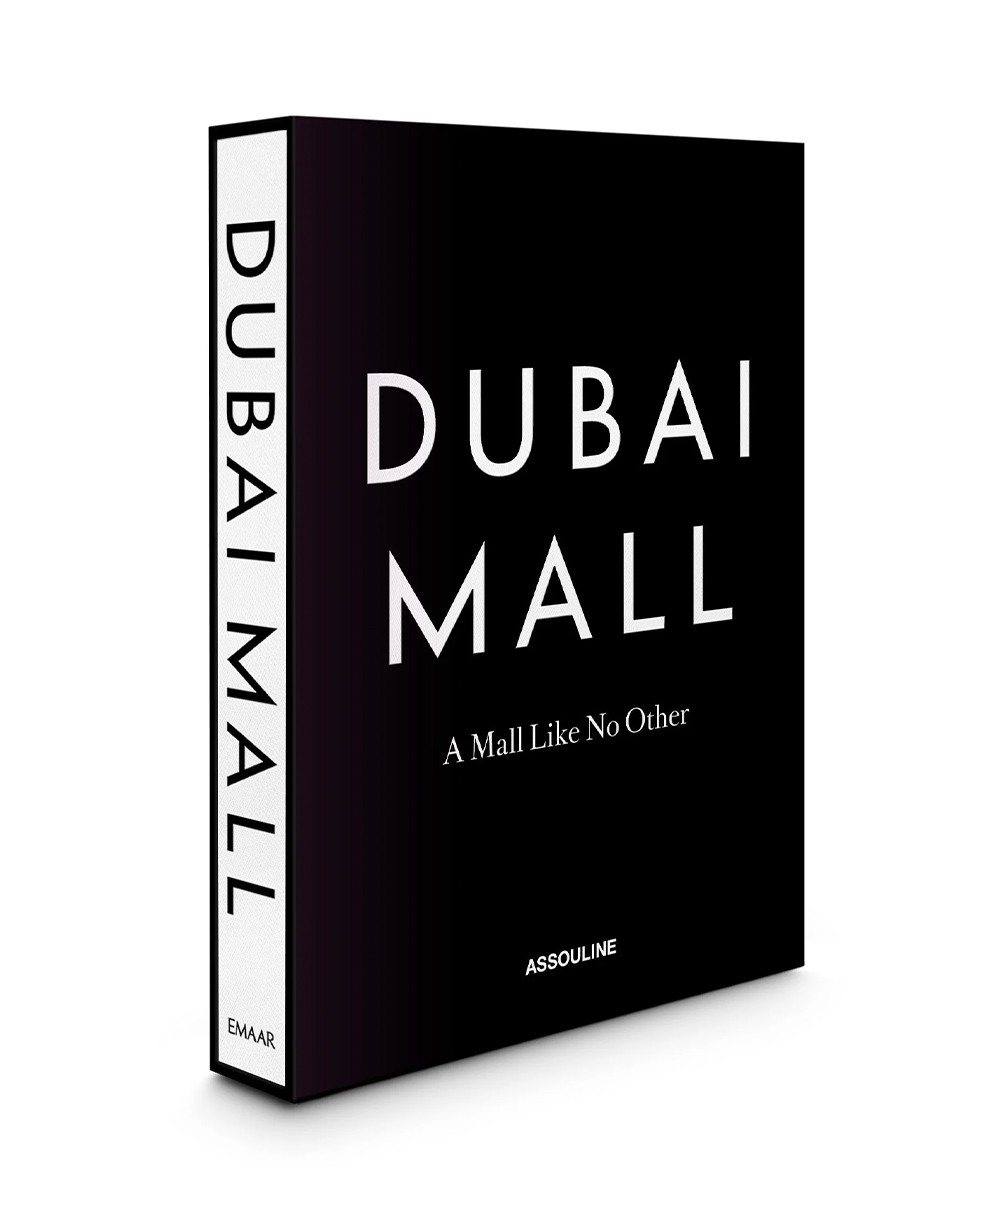 Cover des Coffee Table Books „Dubai Mall“ von Assouline im RAUM concept store 